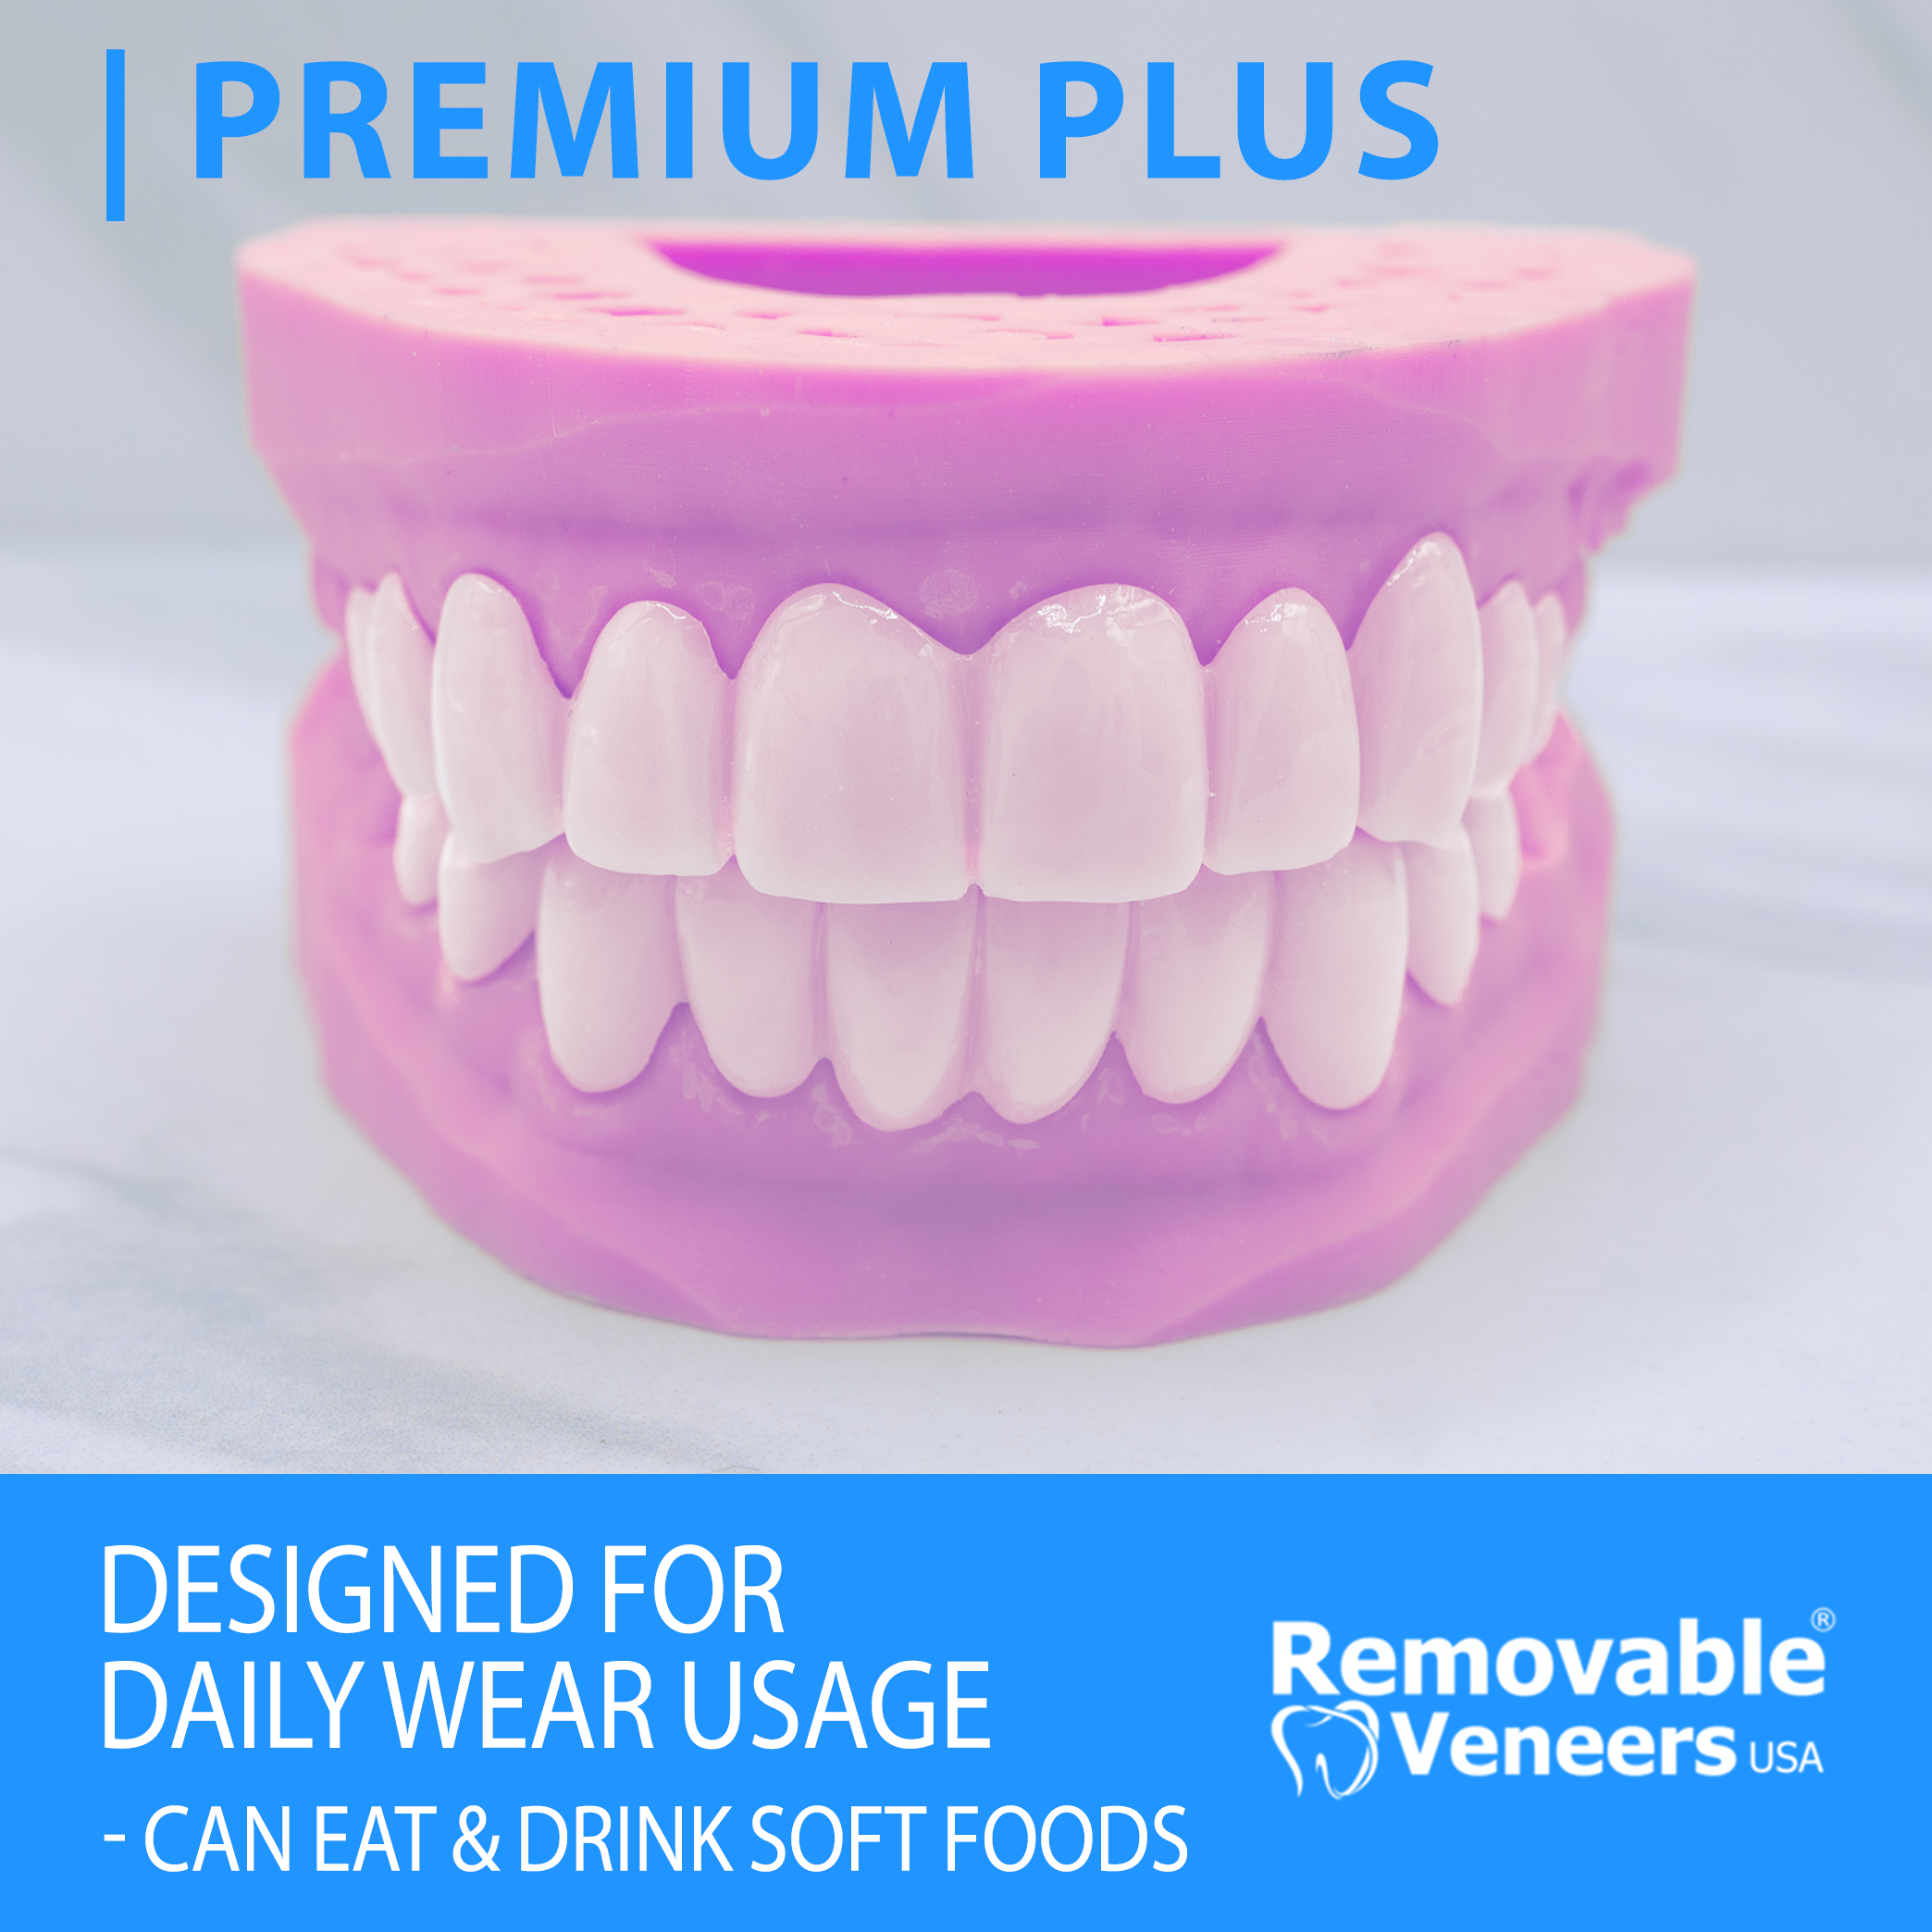 Premium Plus Veneers - Designed for Daily Wear Usage